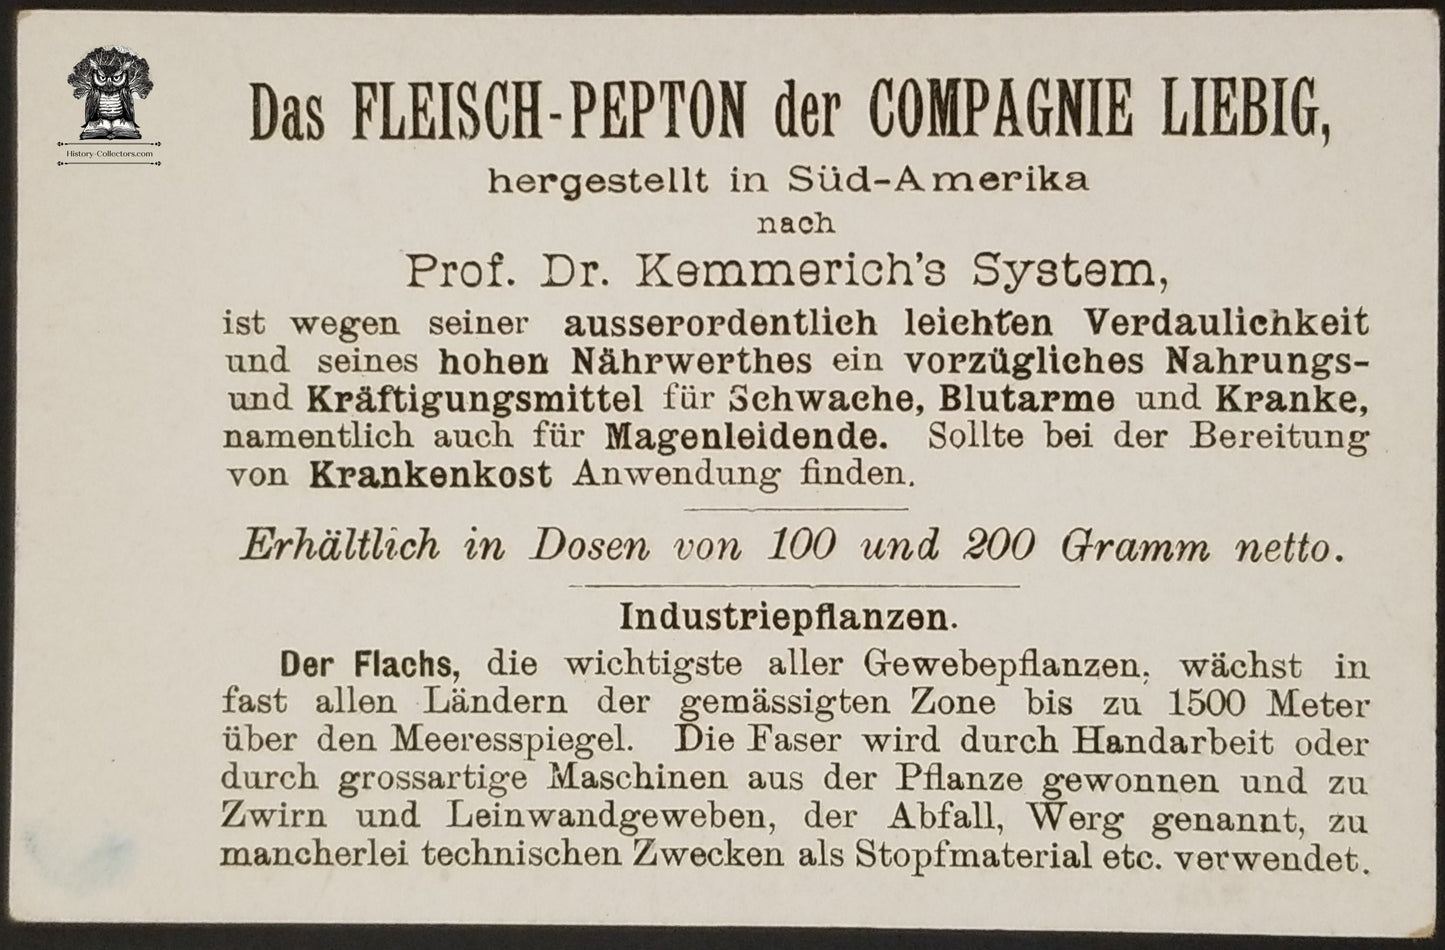 1880's Liebig's Extract German Advertising Trade Card - Flax Fiber Harvest